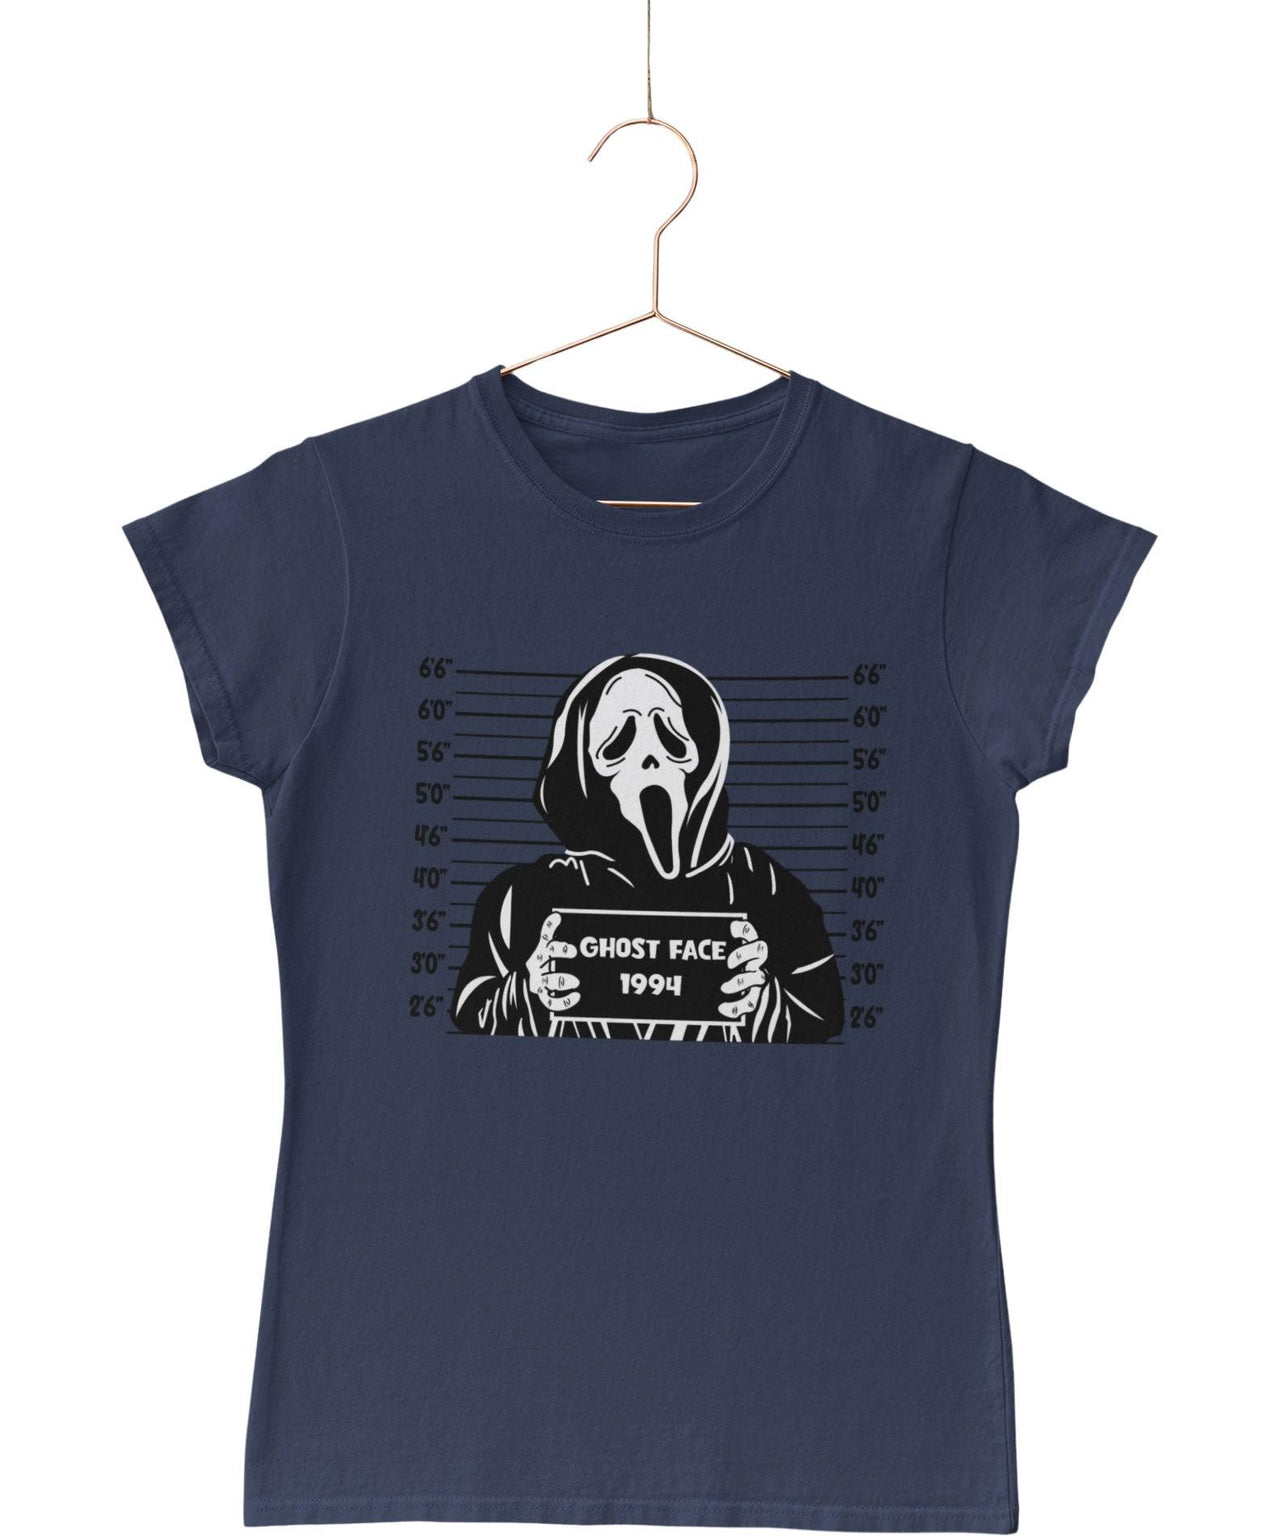 Ghostface Mugshot Horror Film Tribute Womens Fitted T-Shirt 8Ball